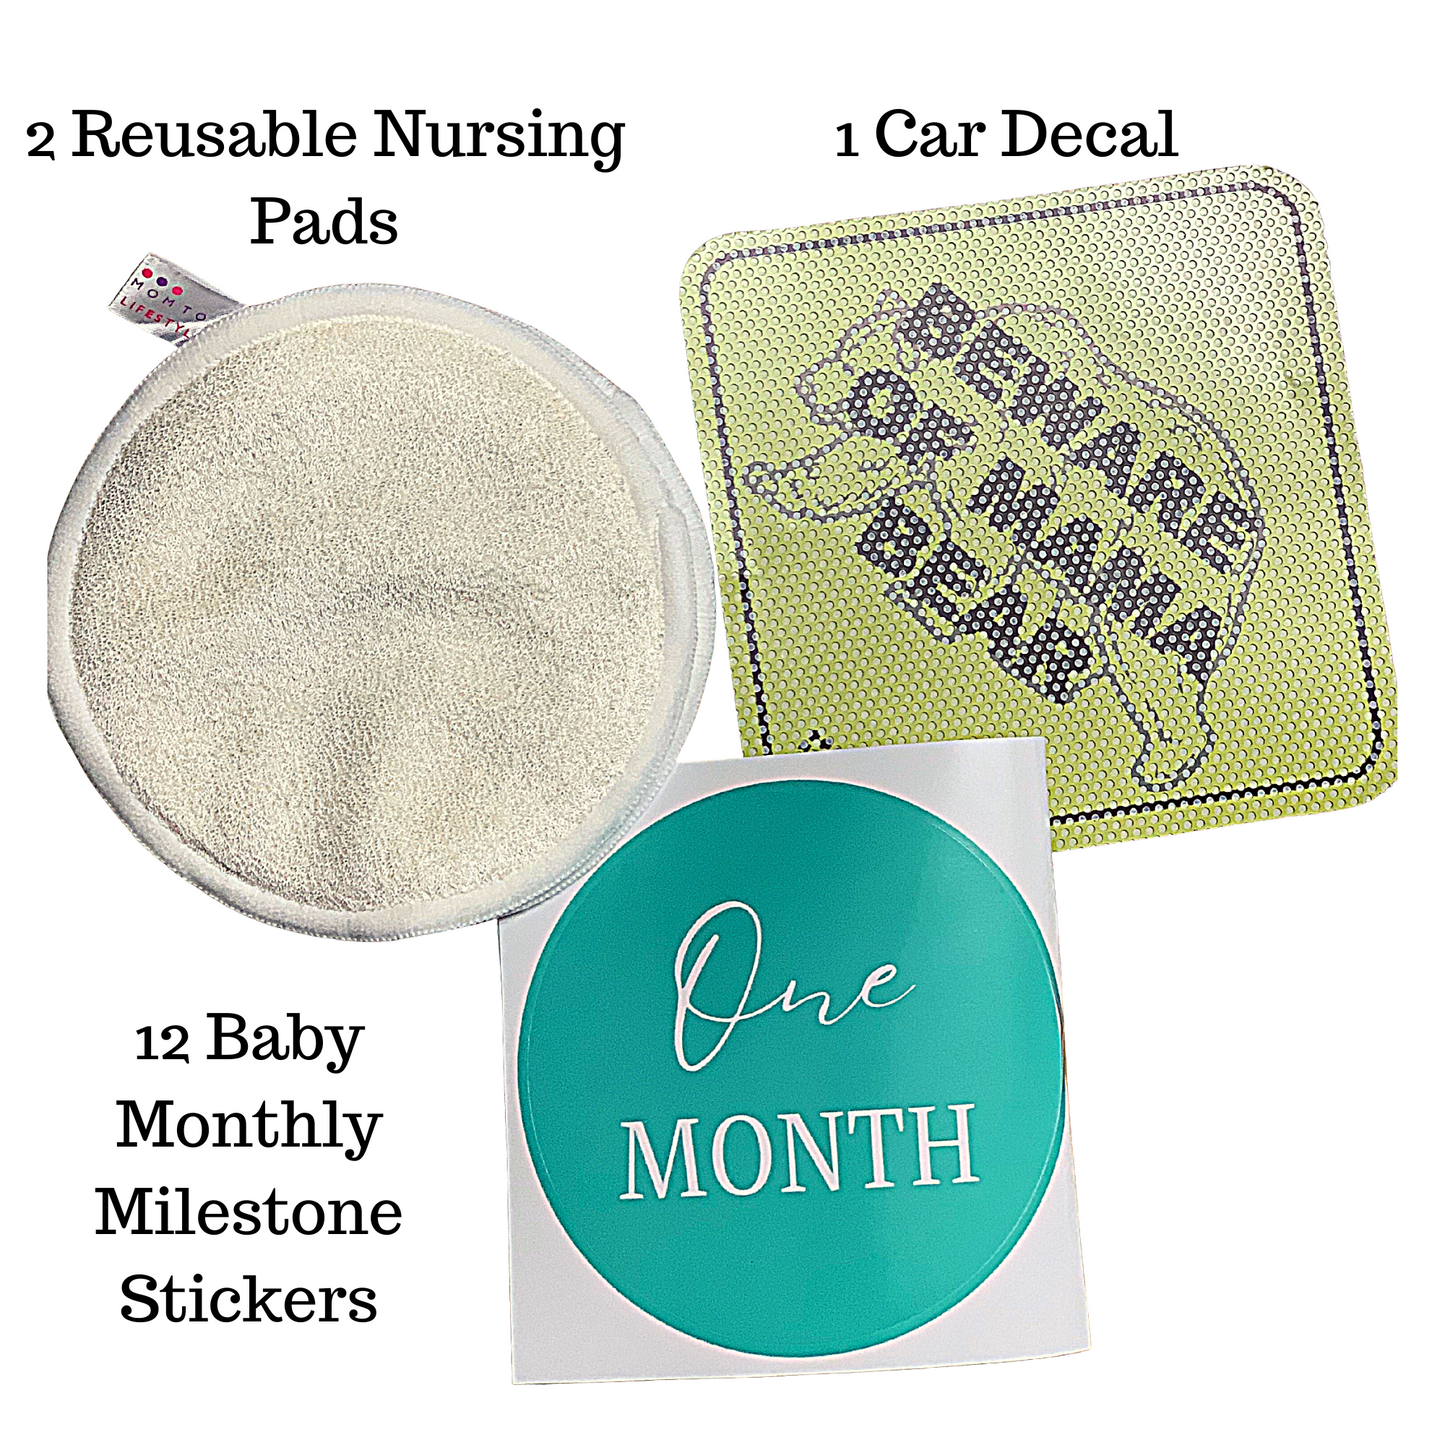 pregnancy nursing pads car decal baby milestone cards